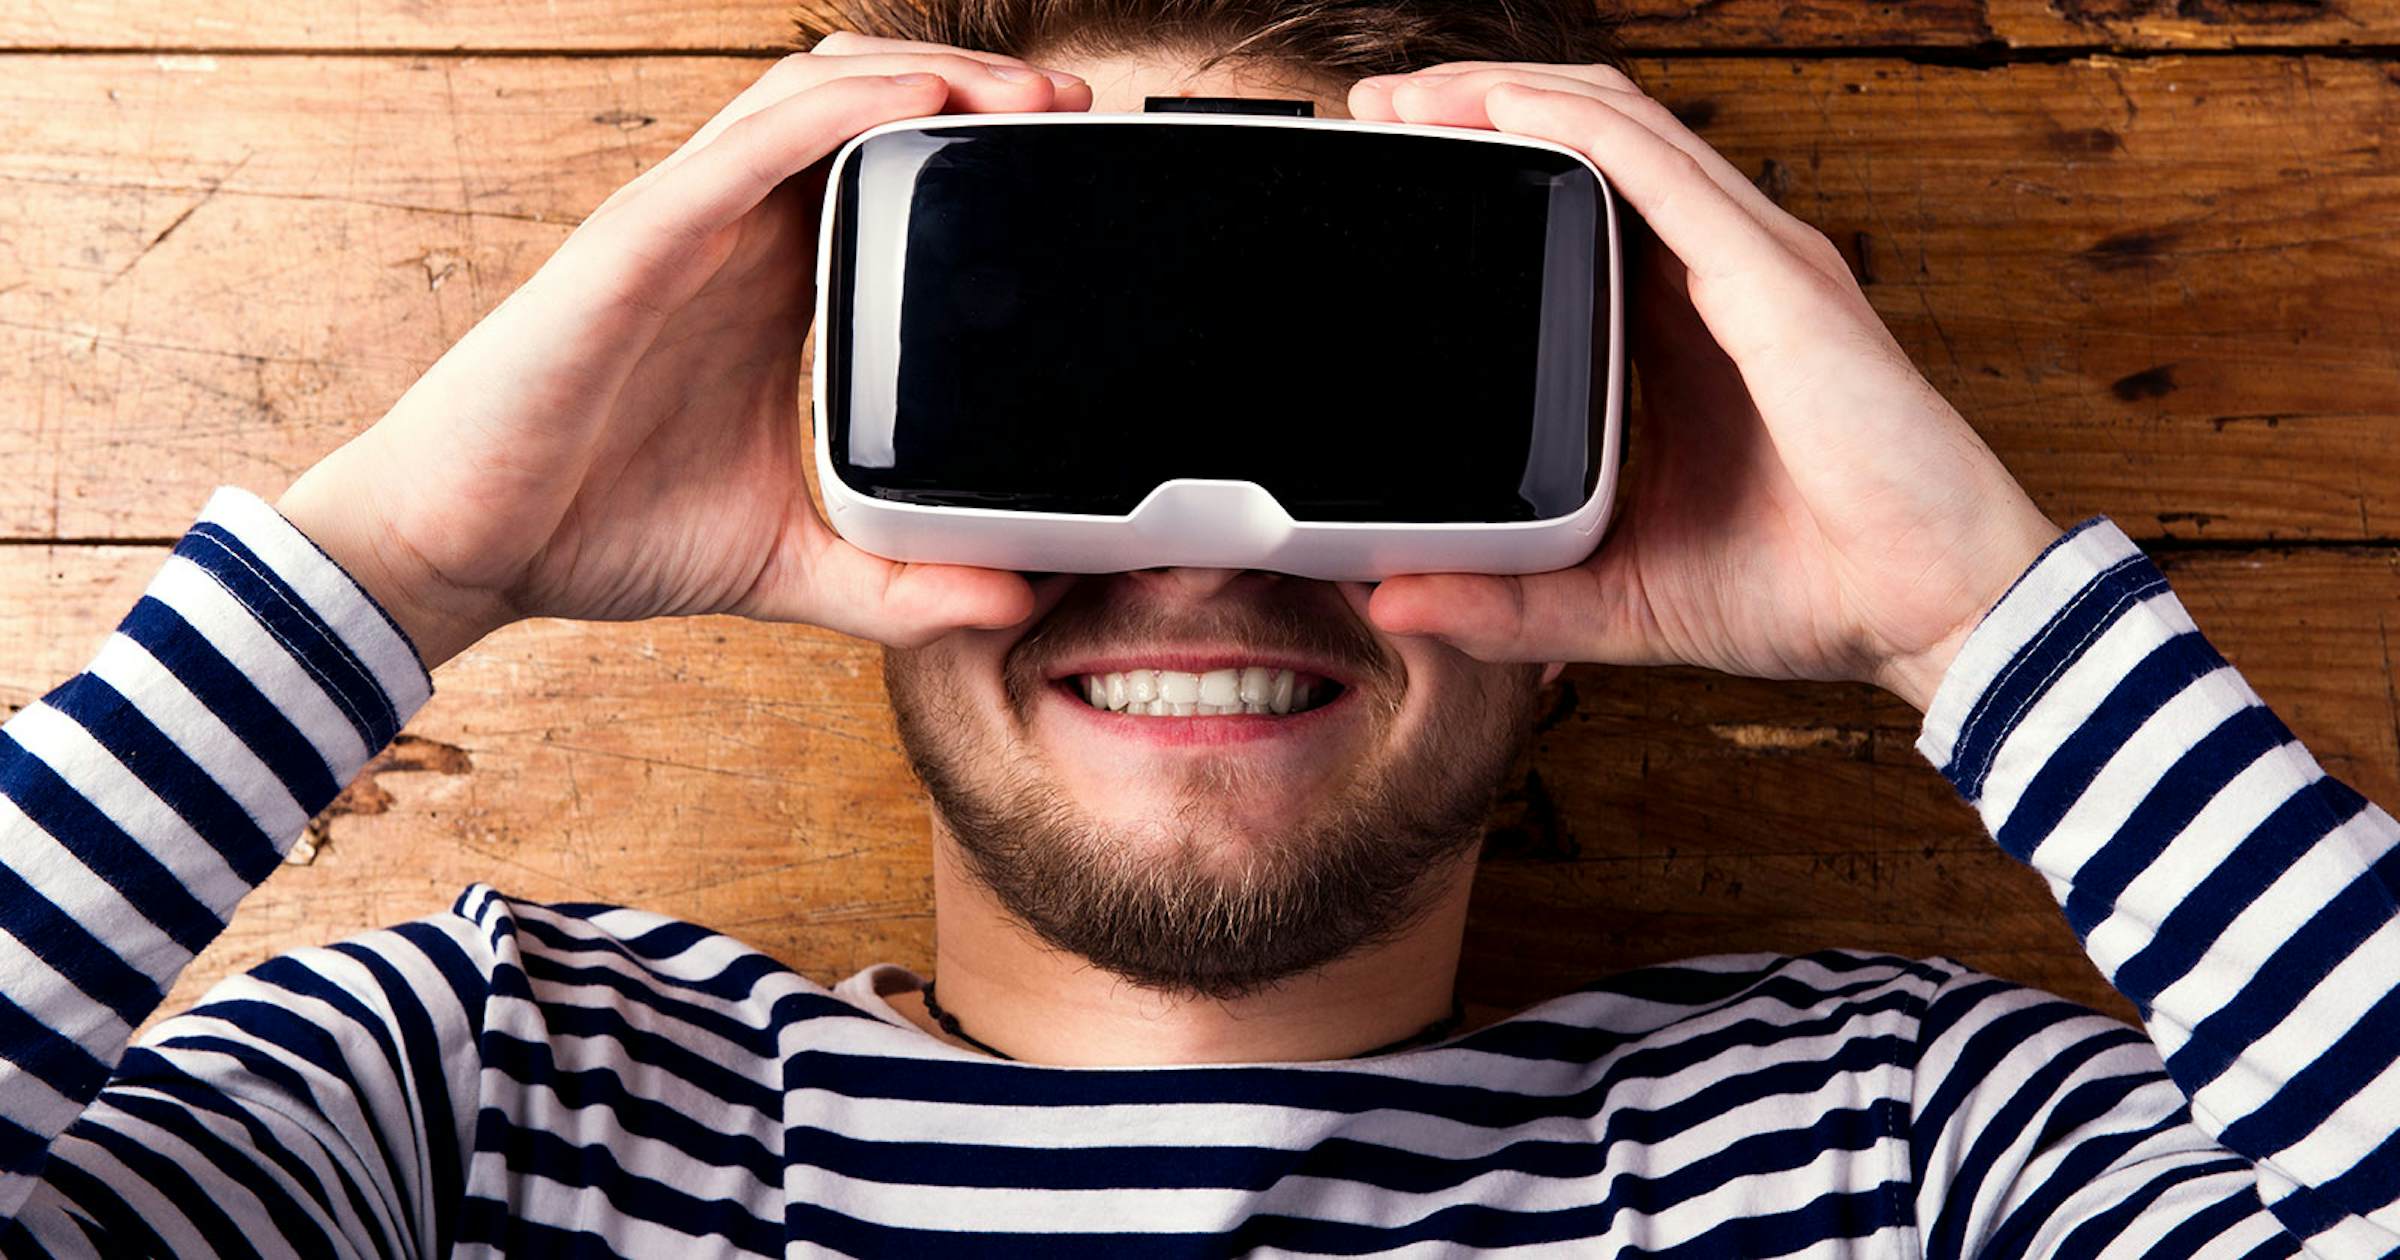 virtual reality marketing case study